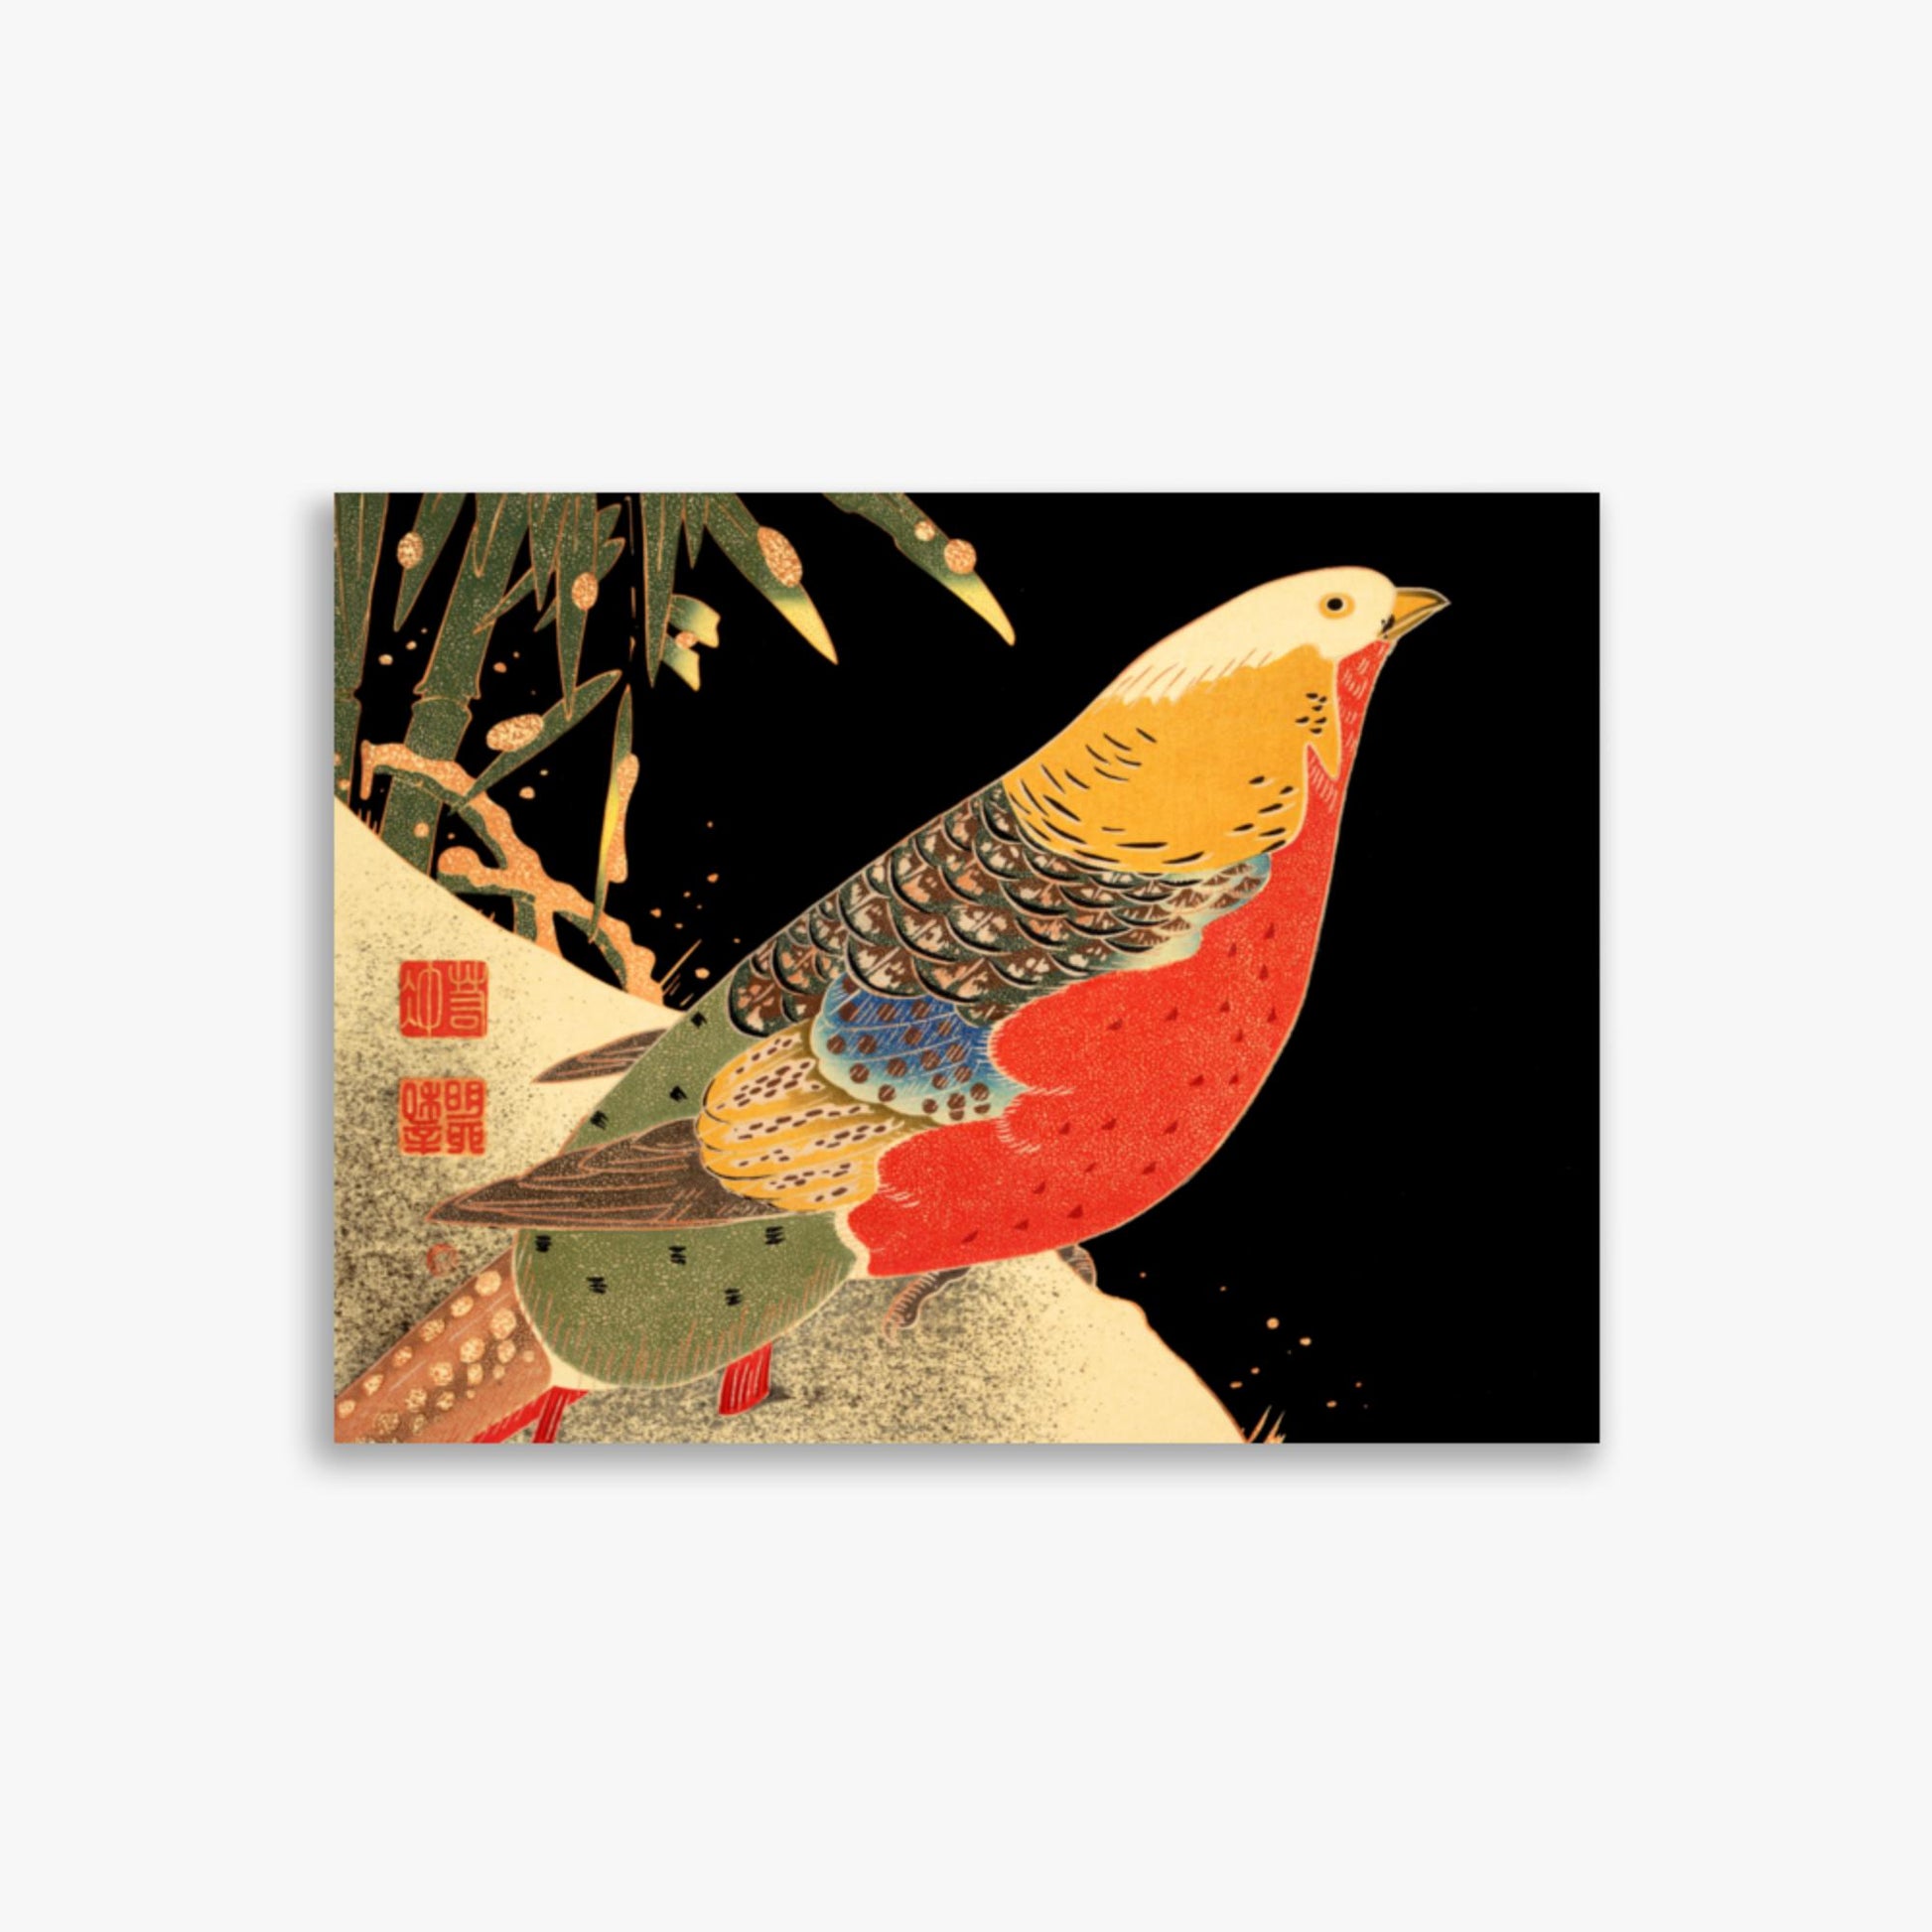 Ito Jakuchu - Golden Pheasant in the Snow 30x40 cm Poster